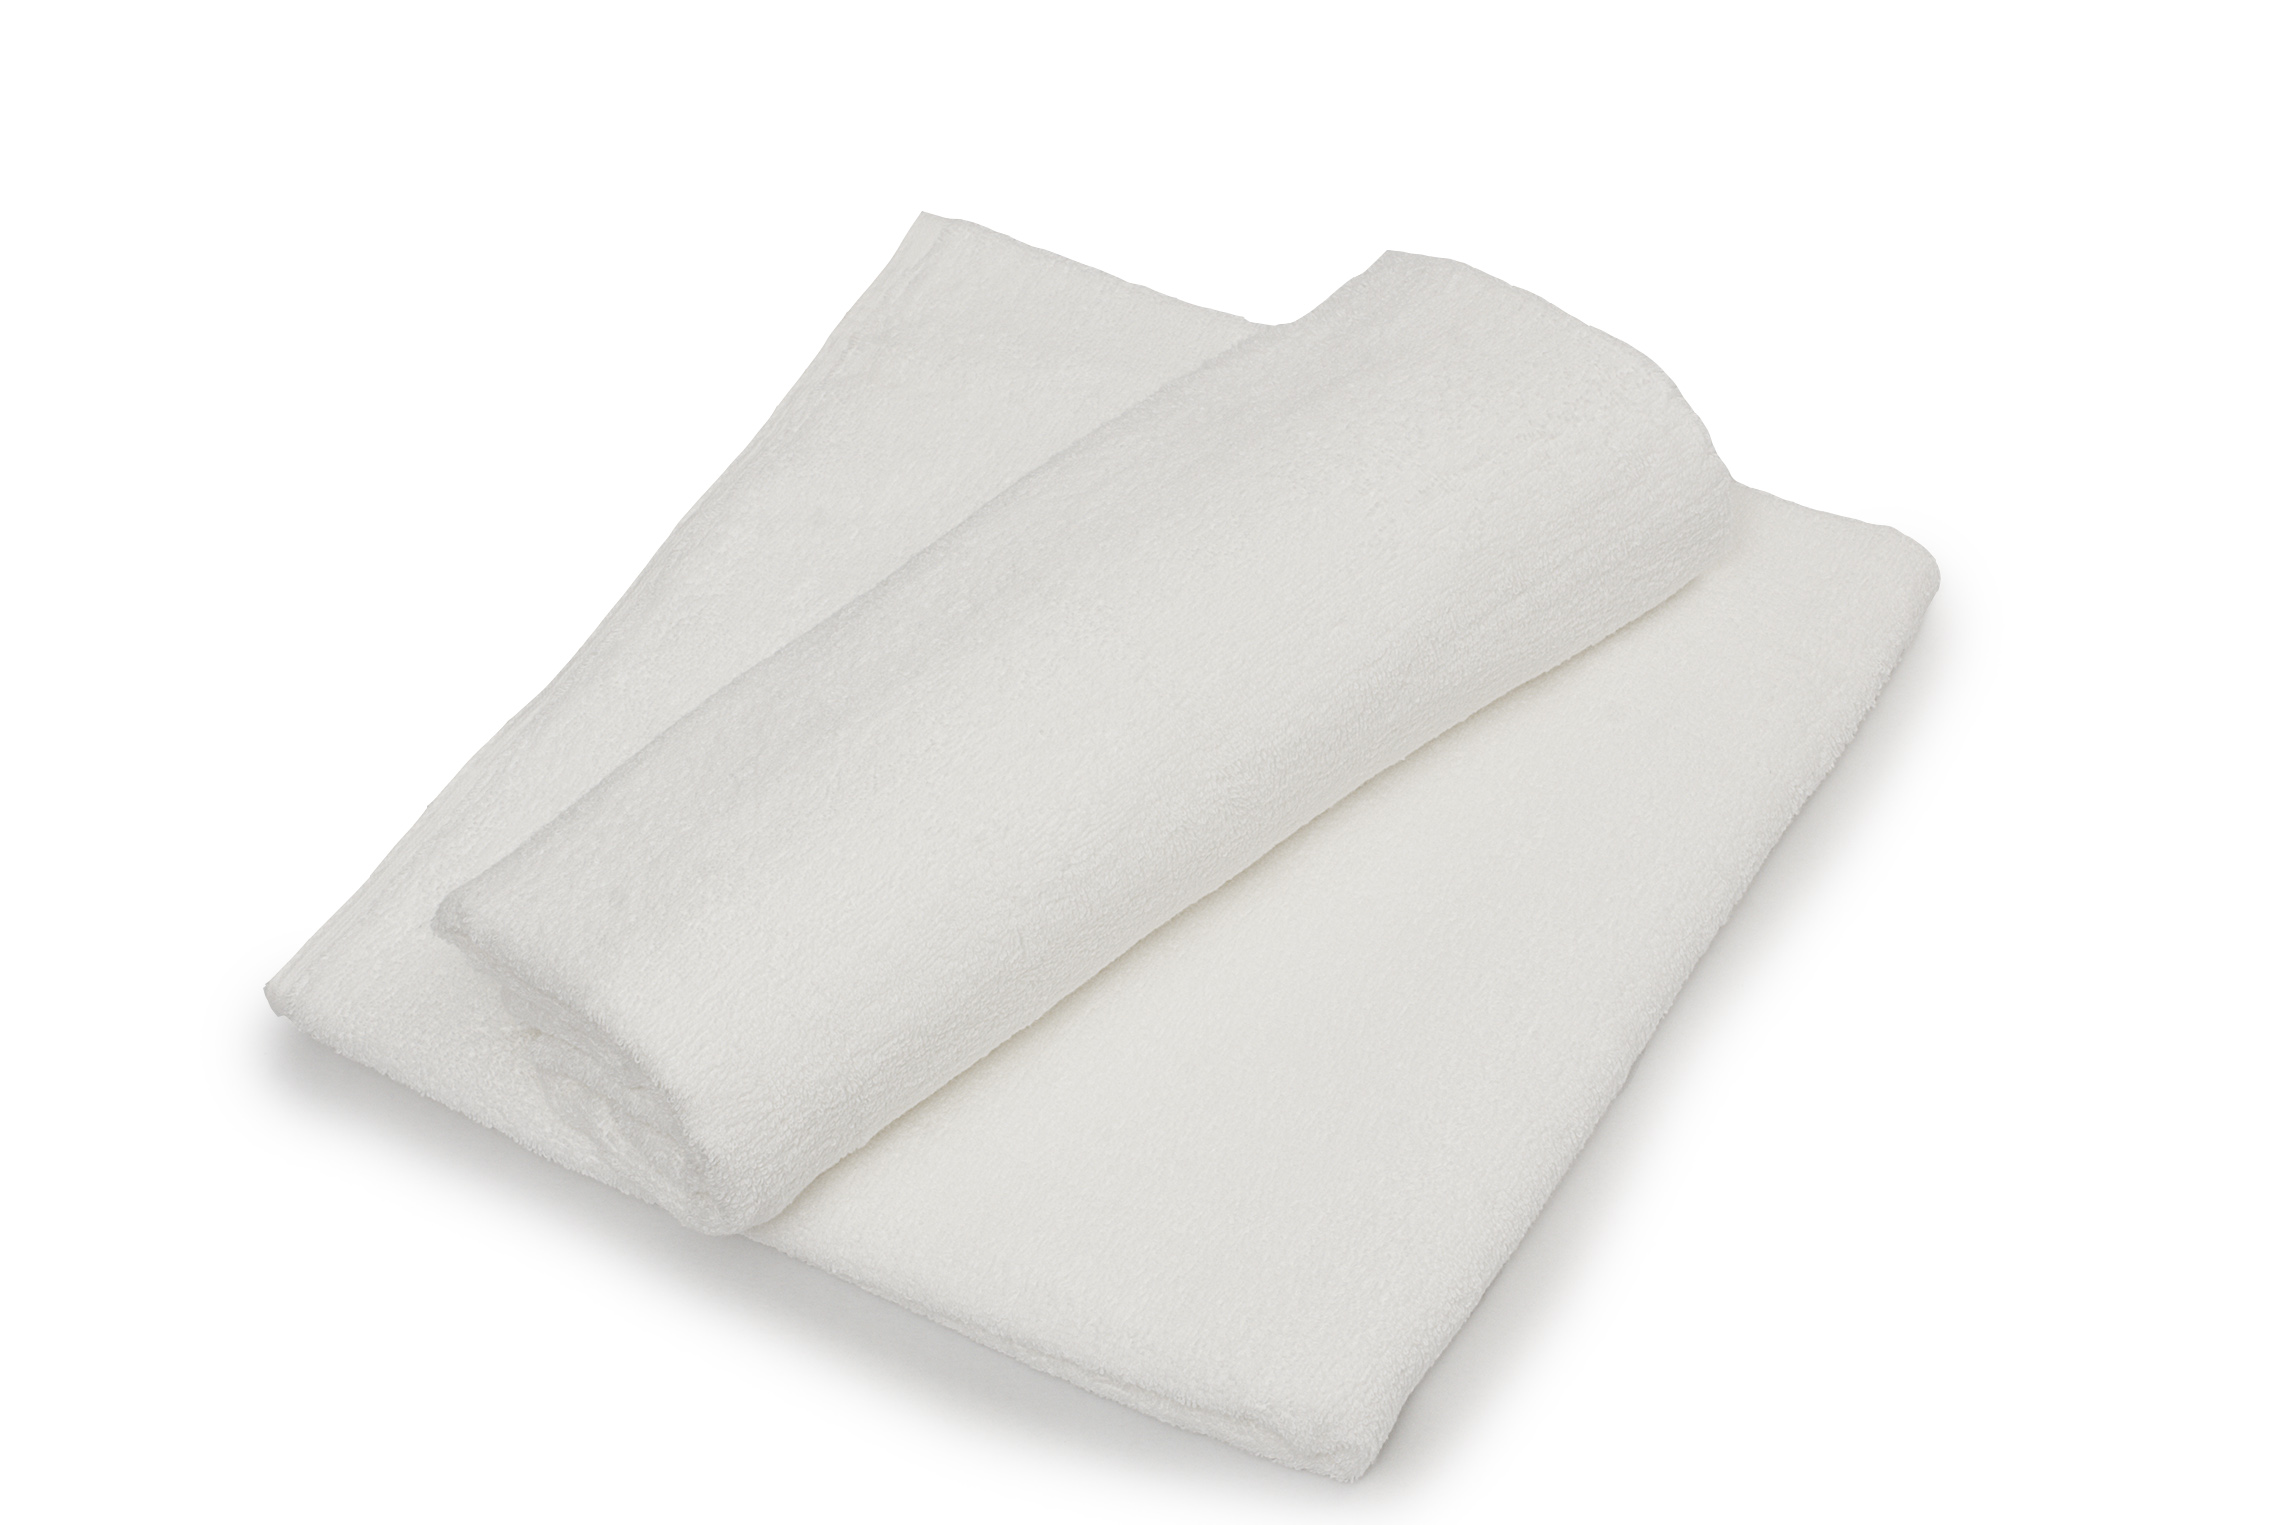 Toallas de algodón blancas 500 gr. para hostelería